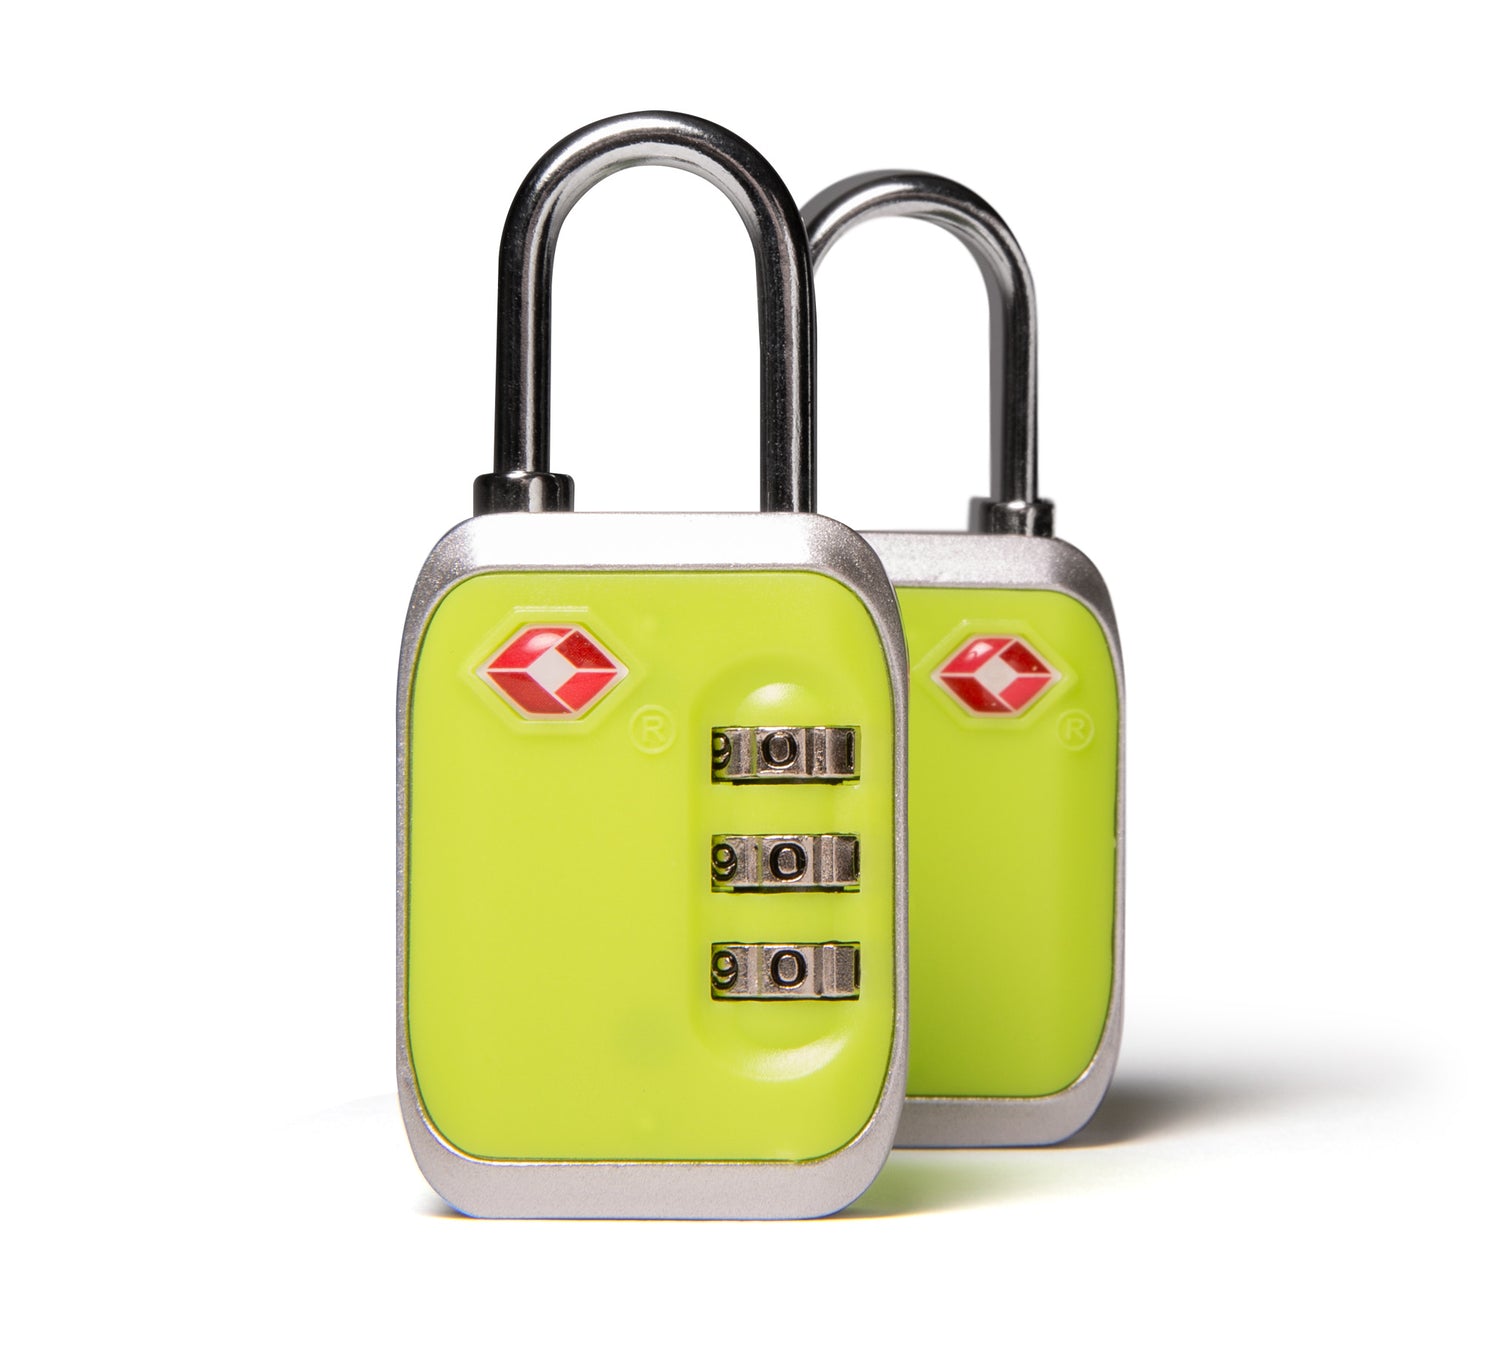 Set of 2 three-digit TSA-accepted Key Locks - Bentley